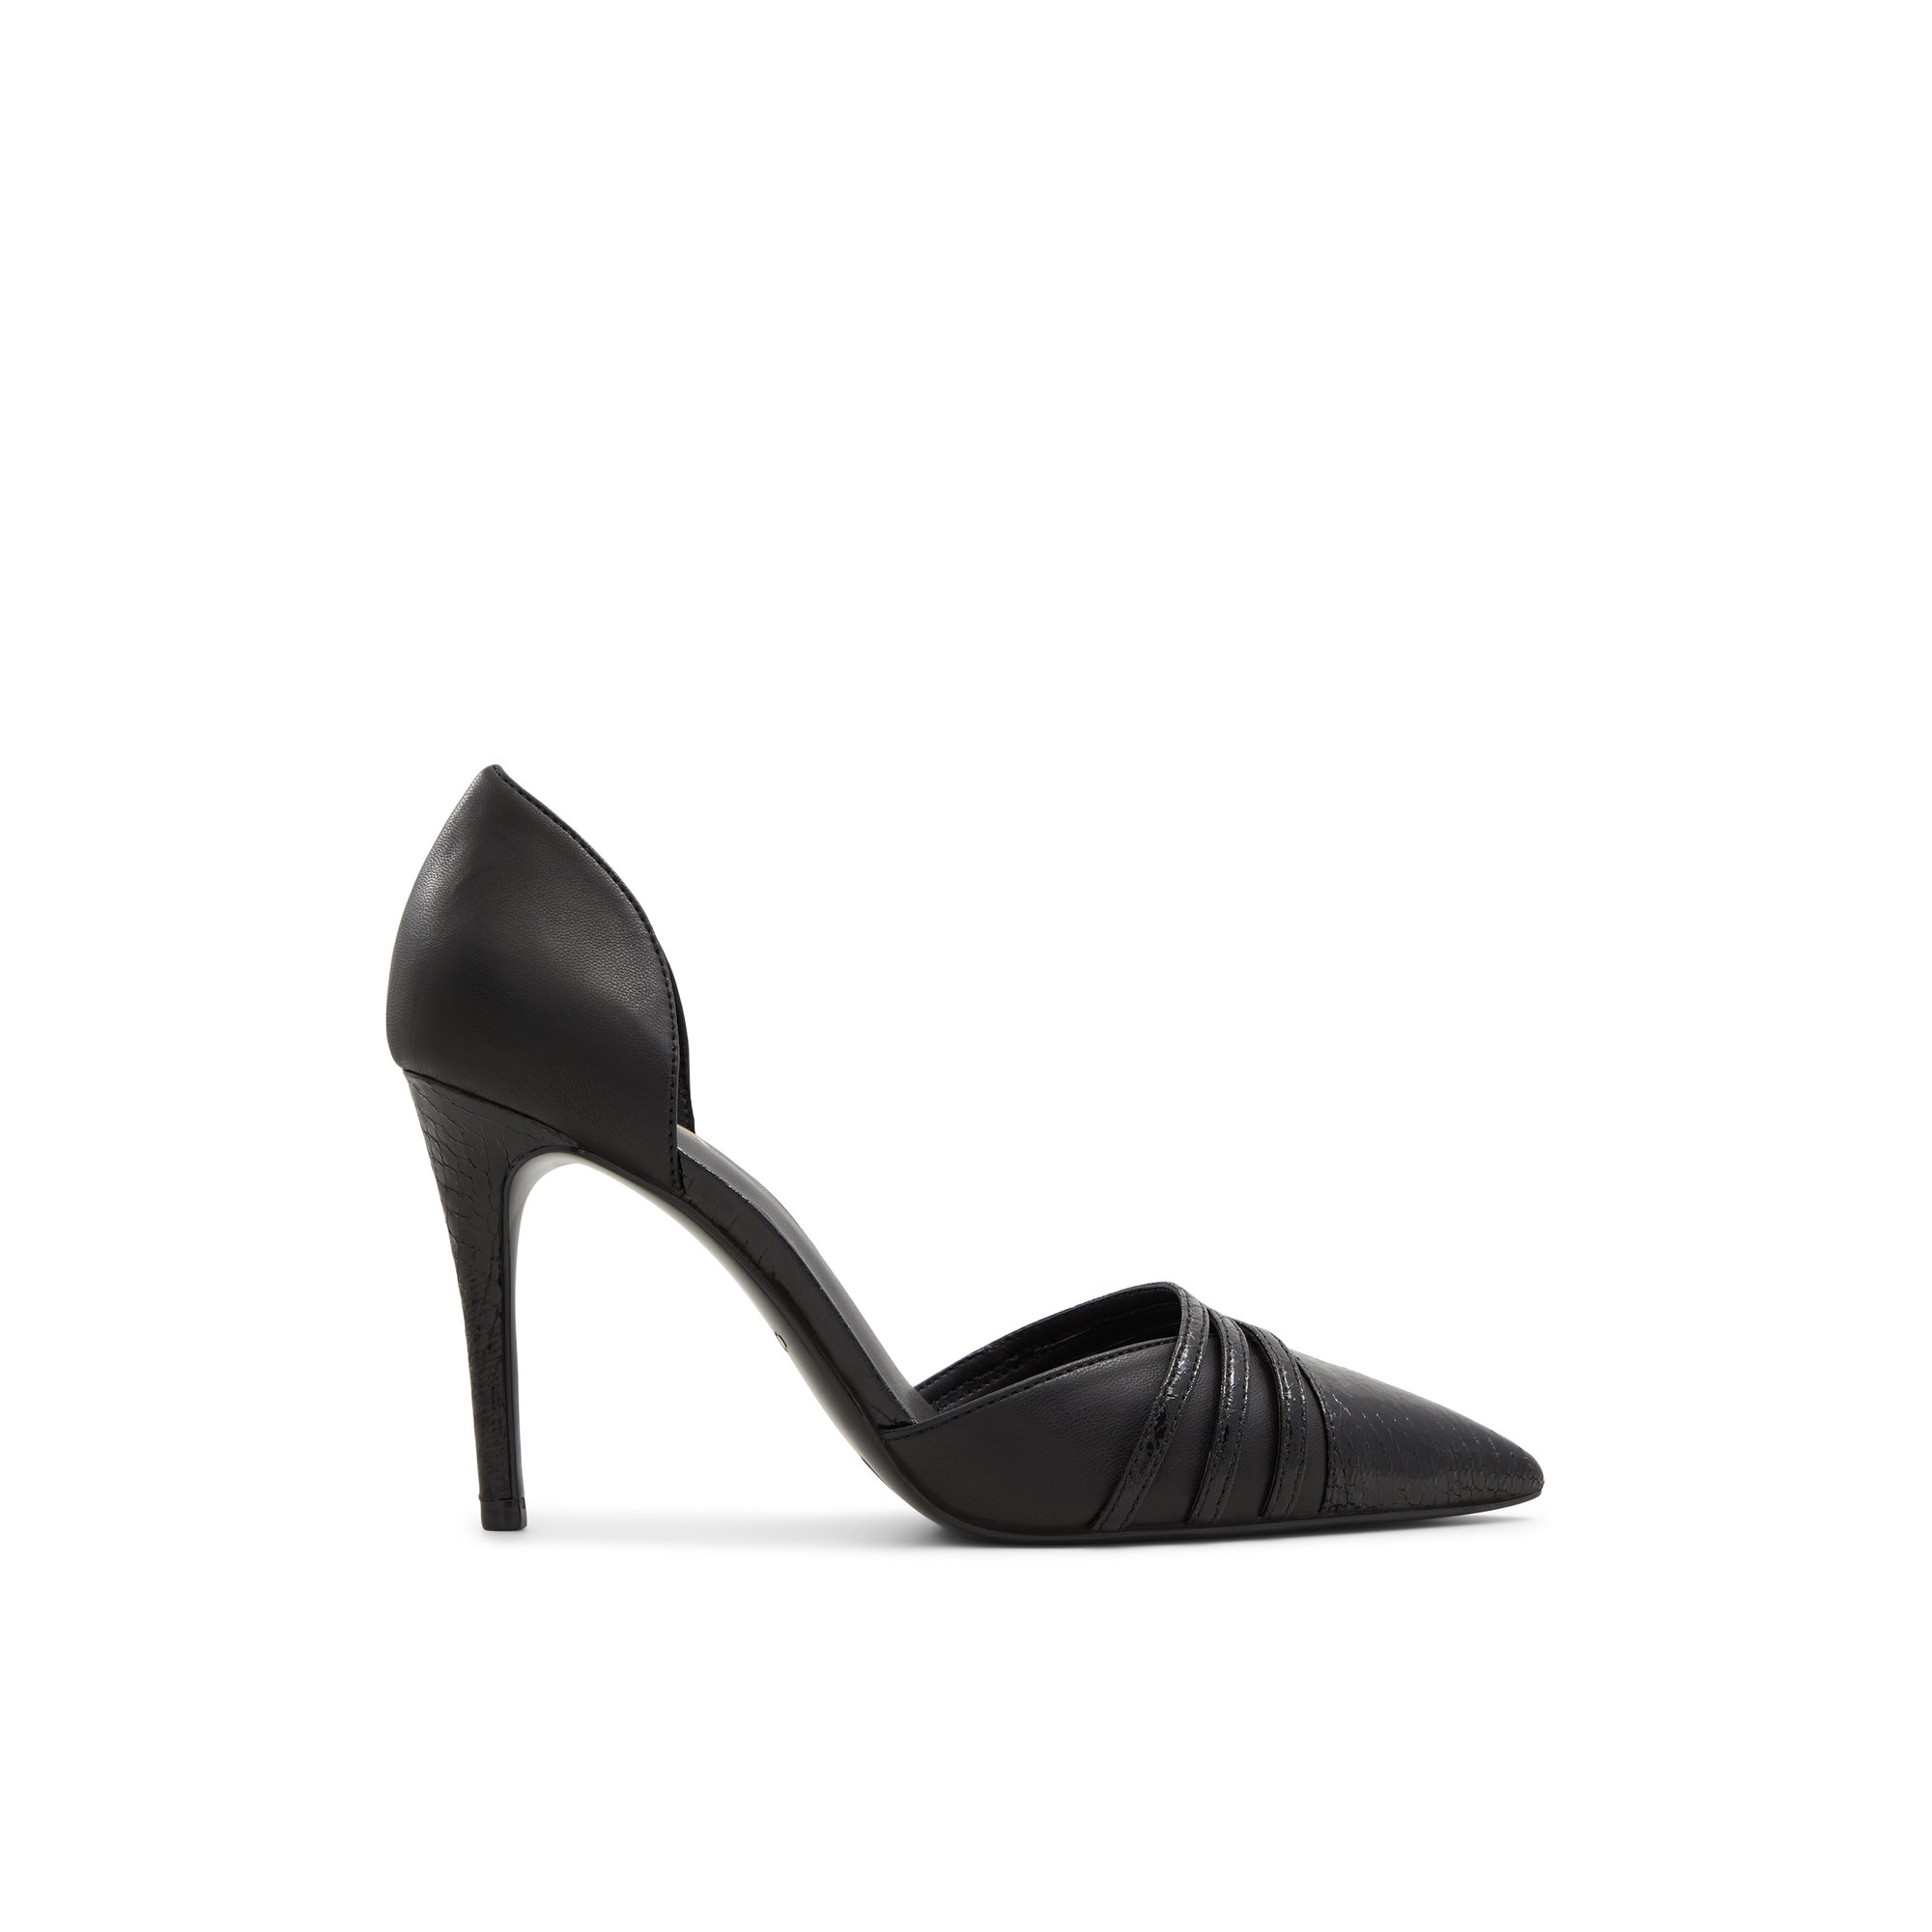 ALDO Caryy - Women's Pump Heel - Black